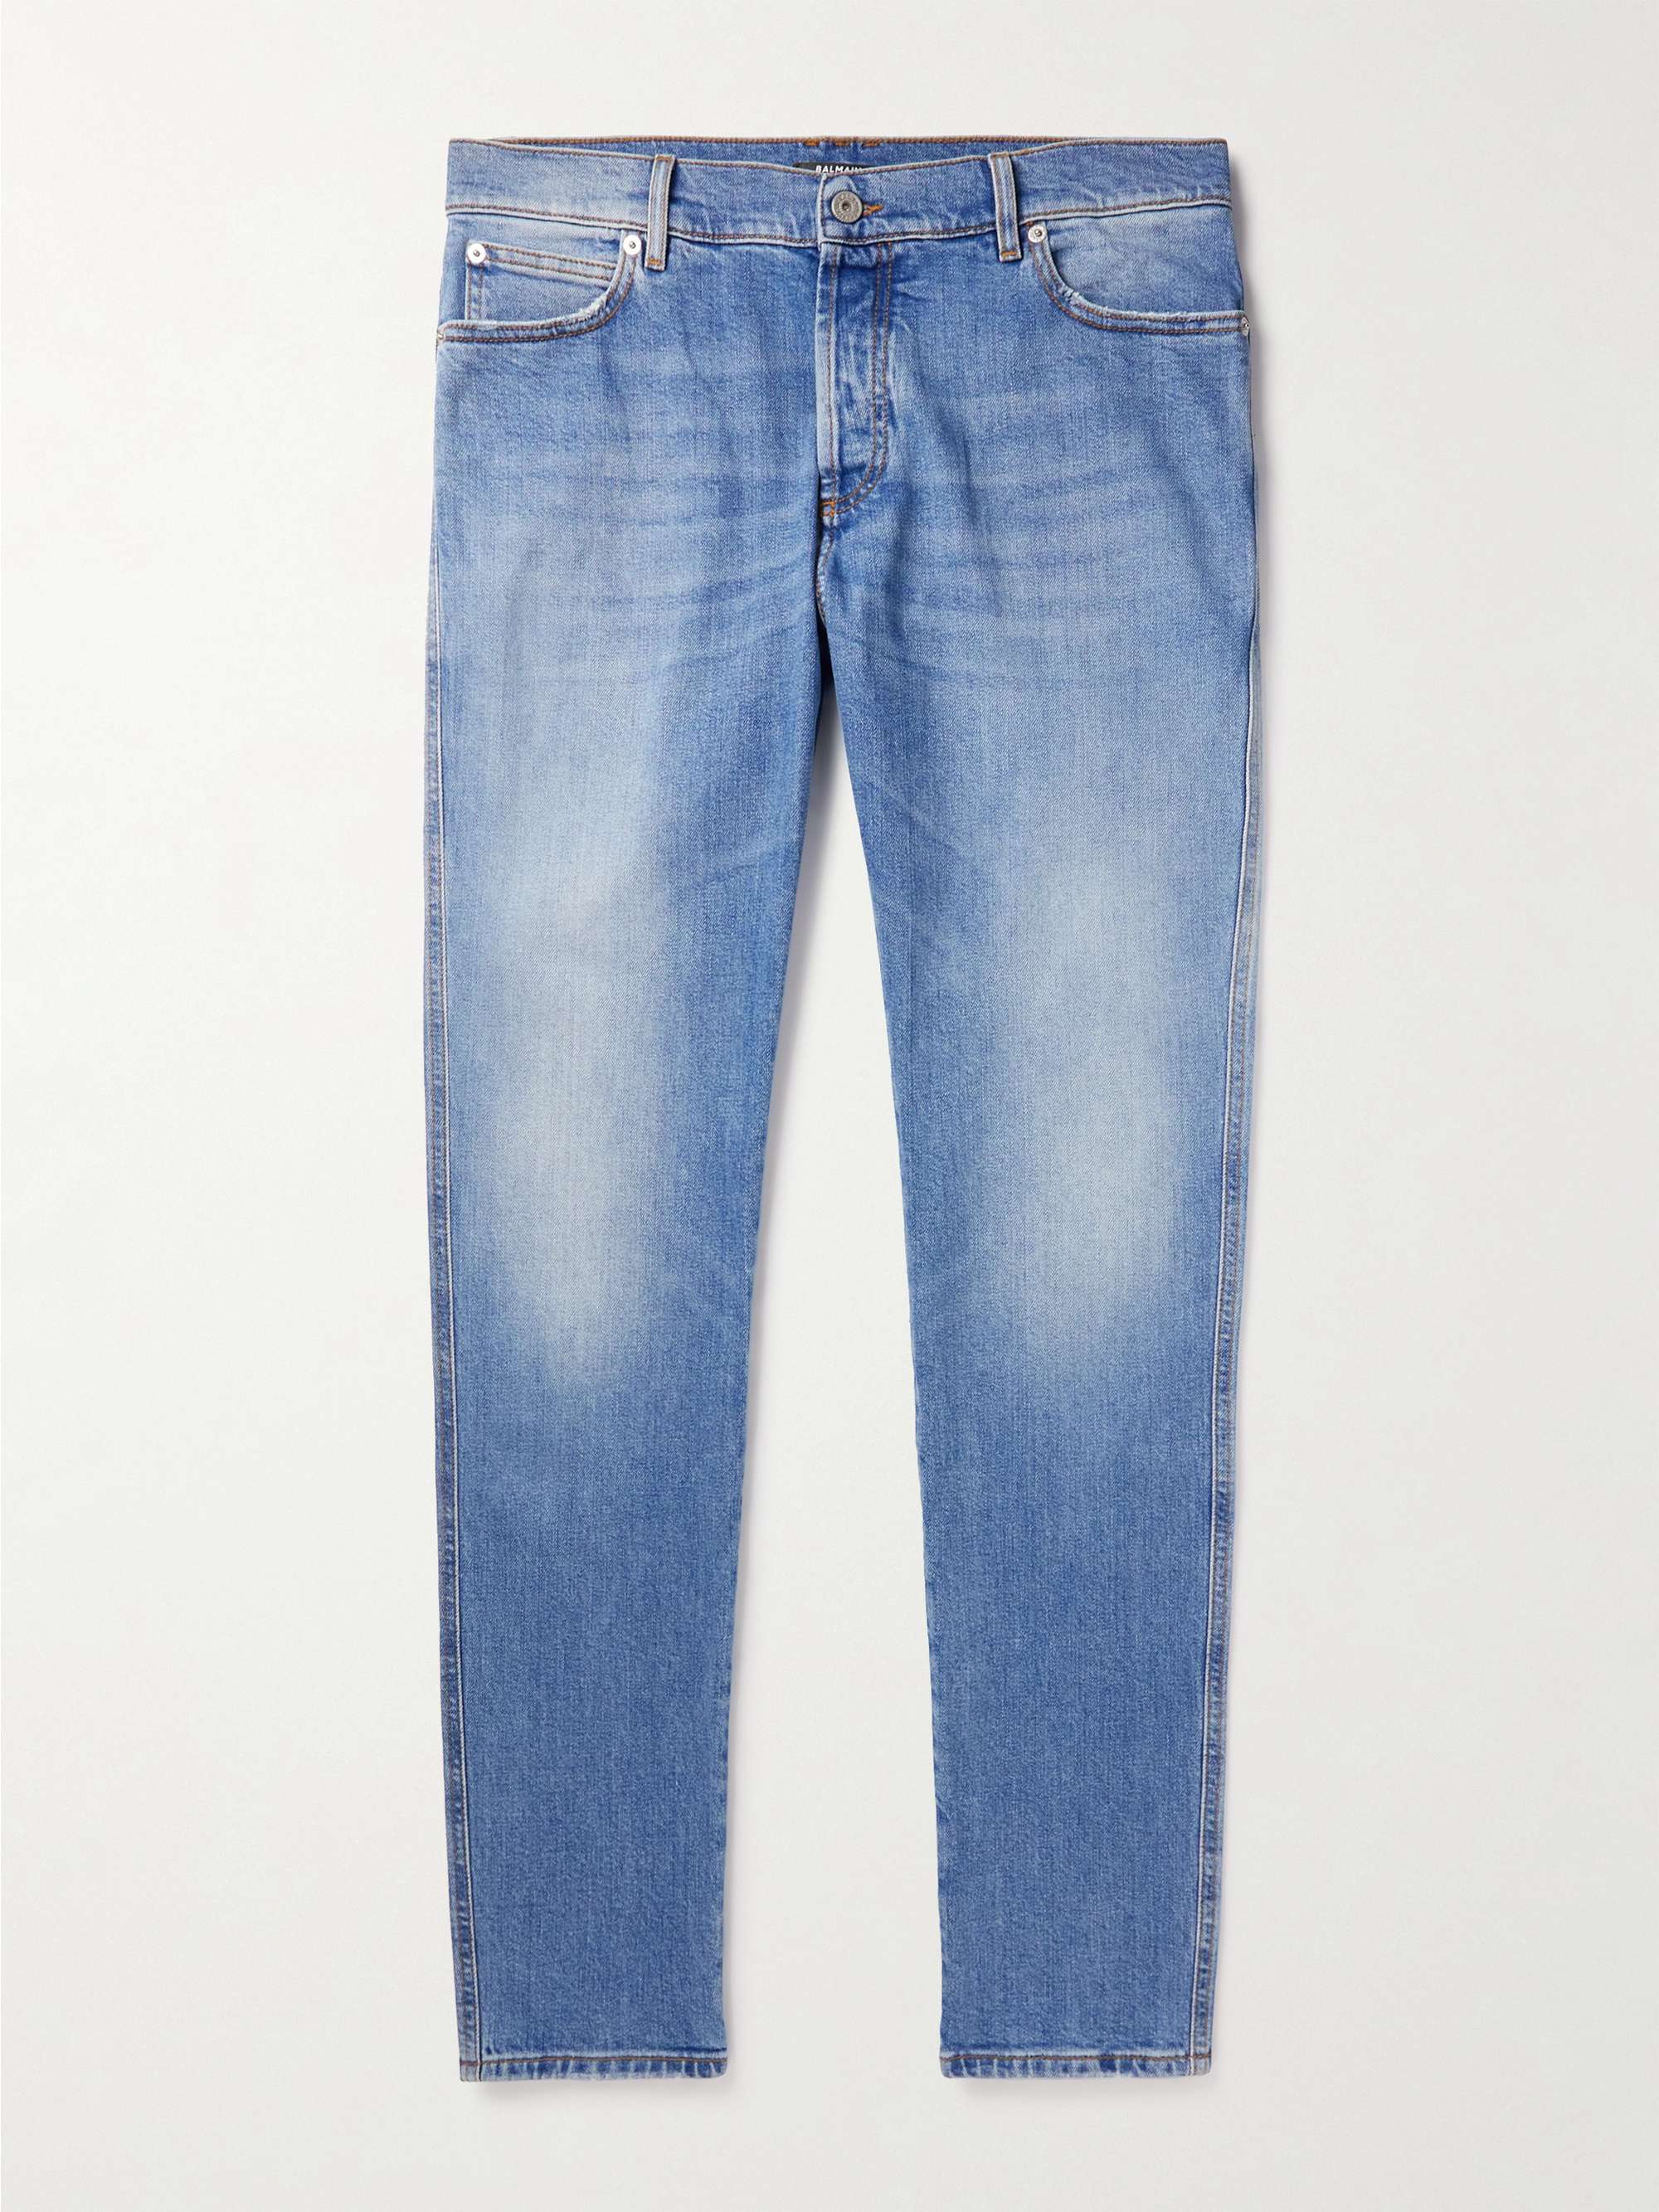 BALMAIN Skinny-Fit Distressed Jeans | MR PORTER